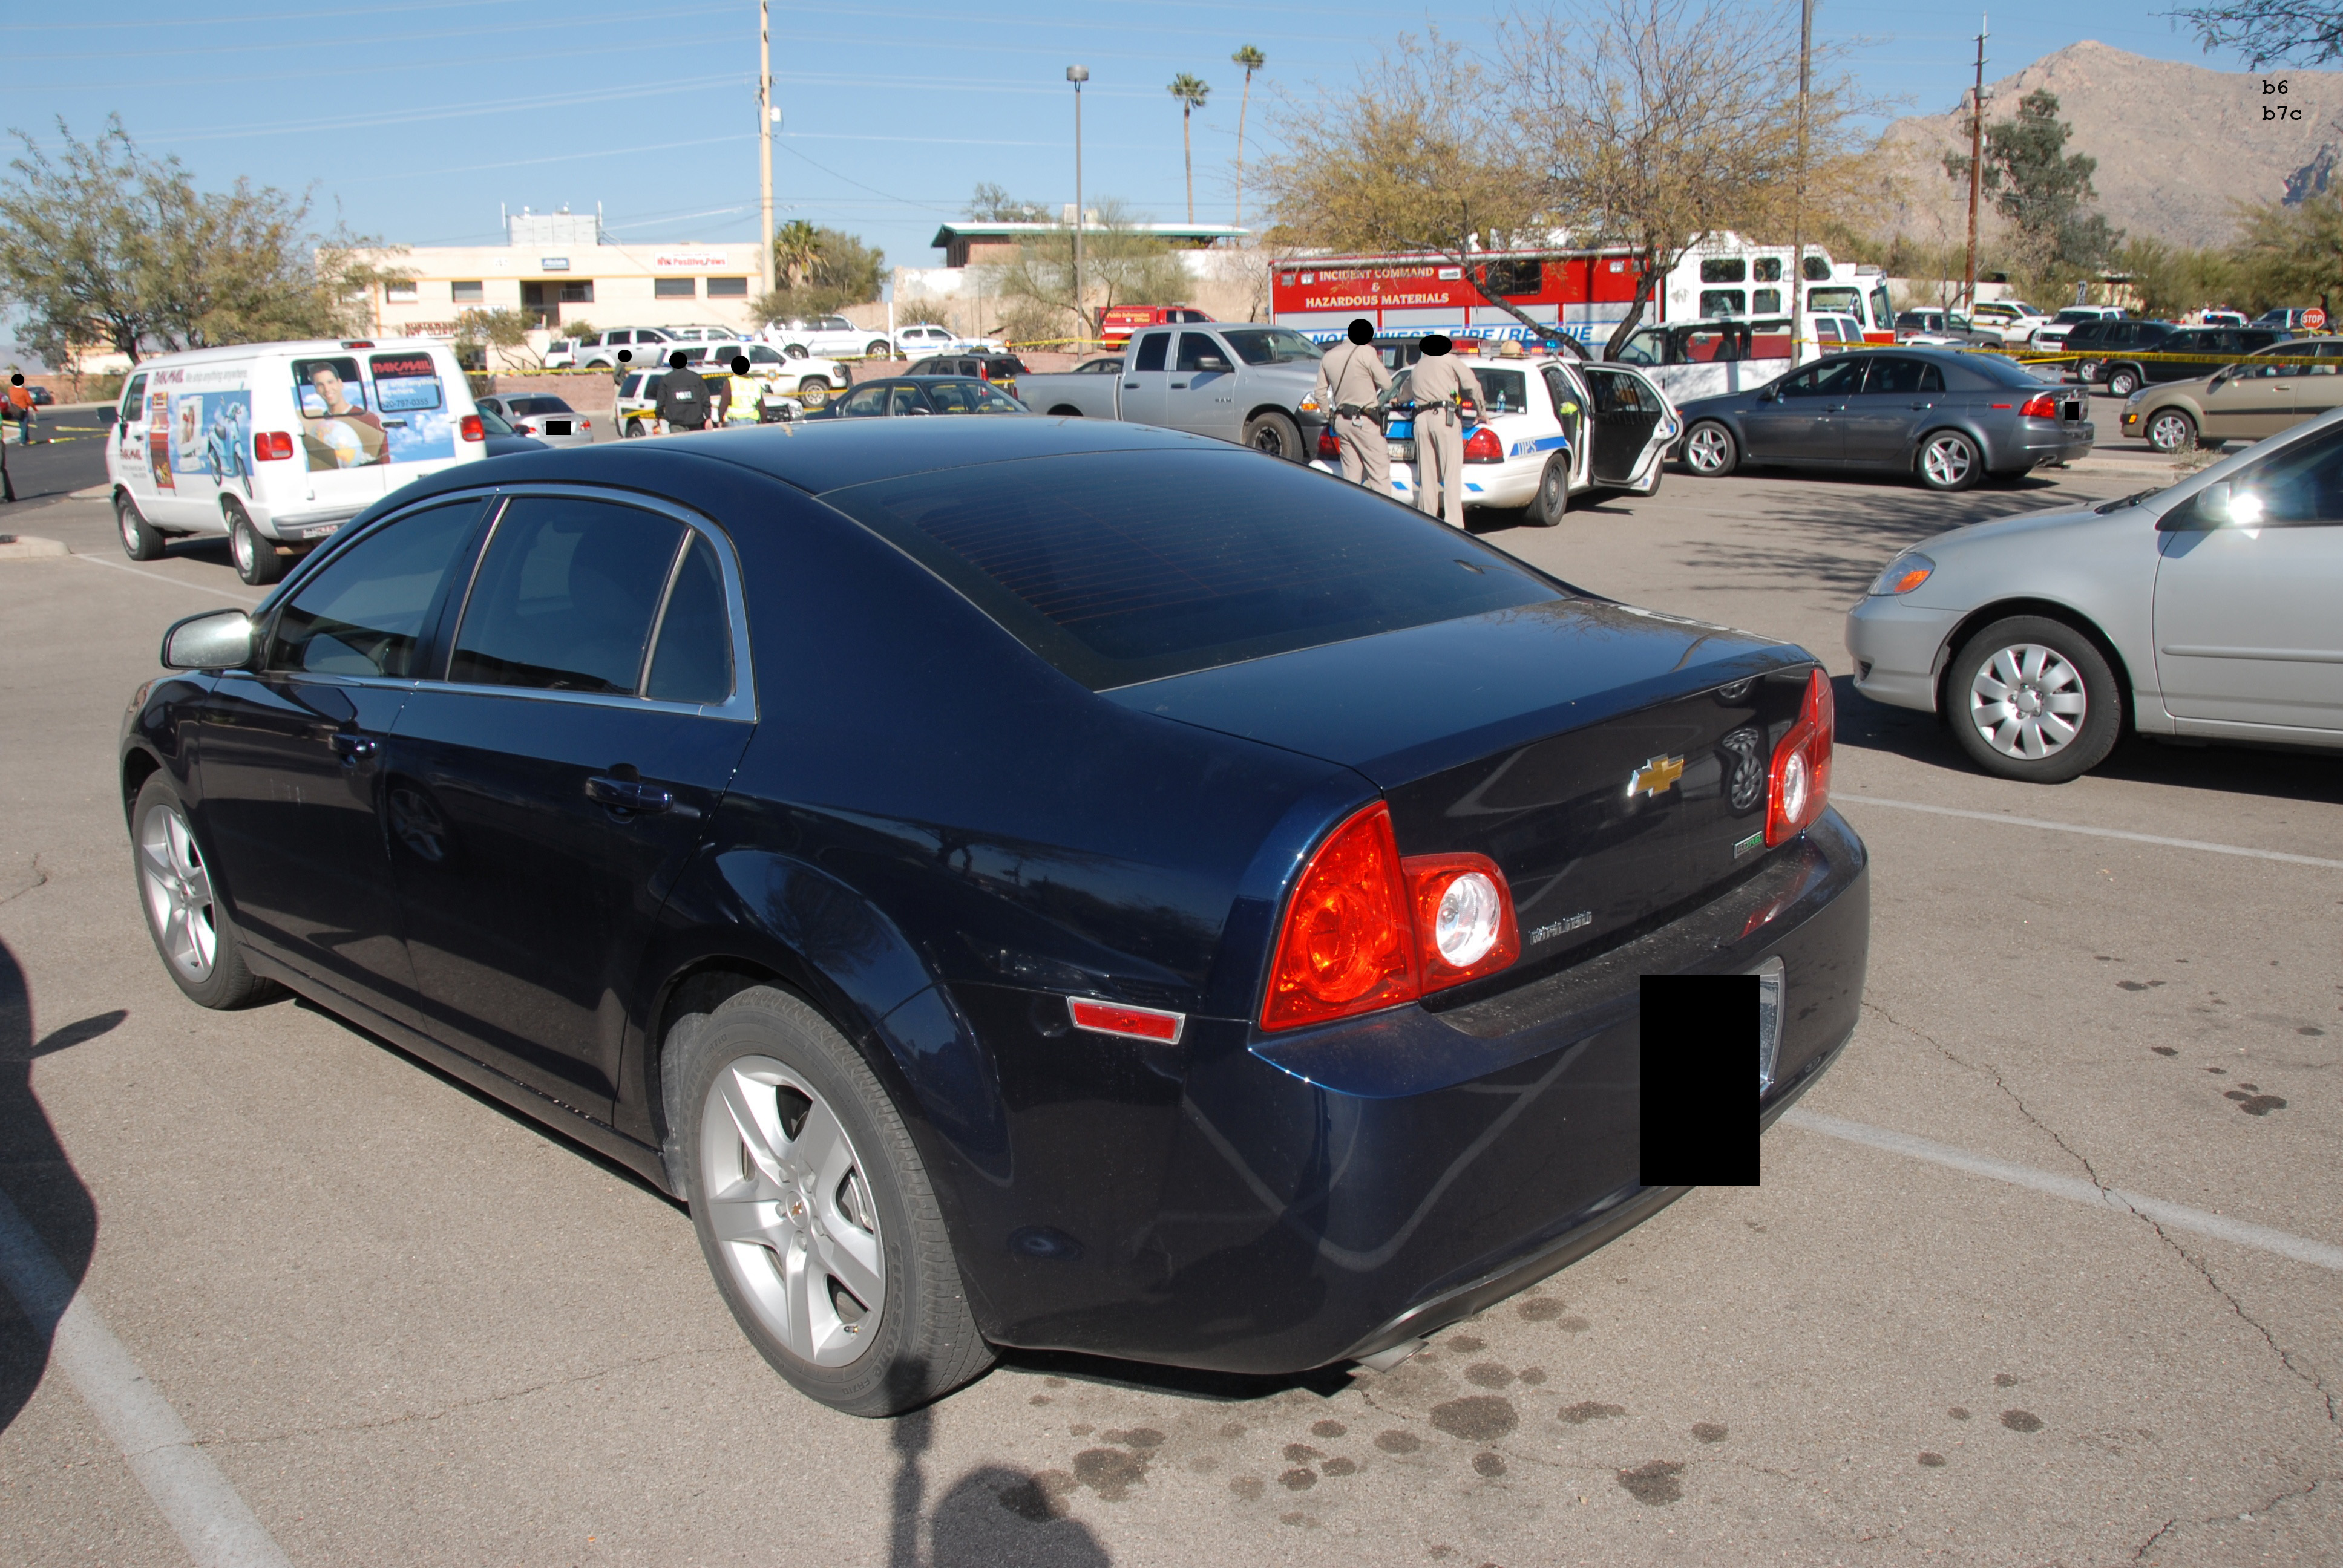 2011 Tucson Shooting Crime Scene - Photograph 542